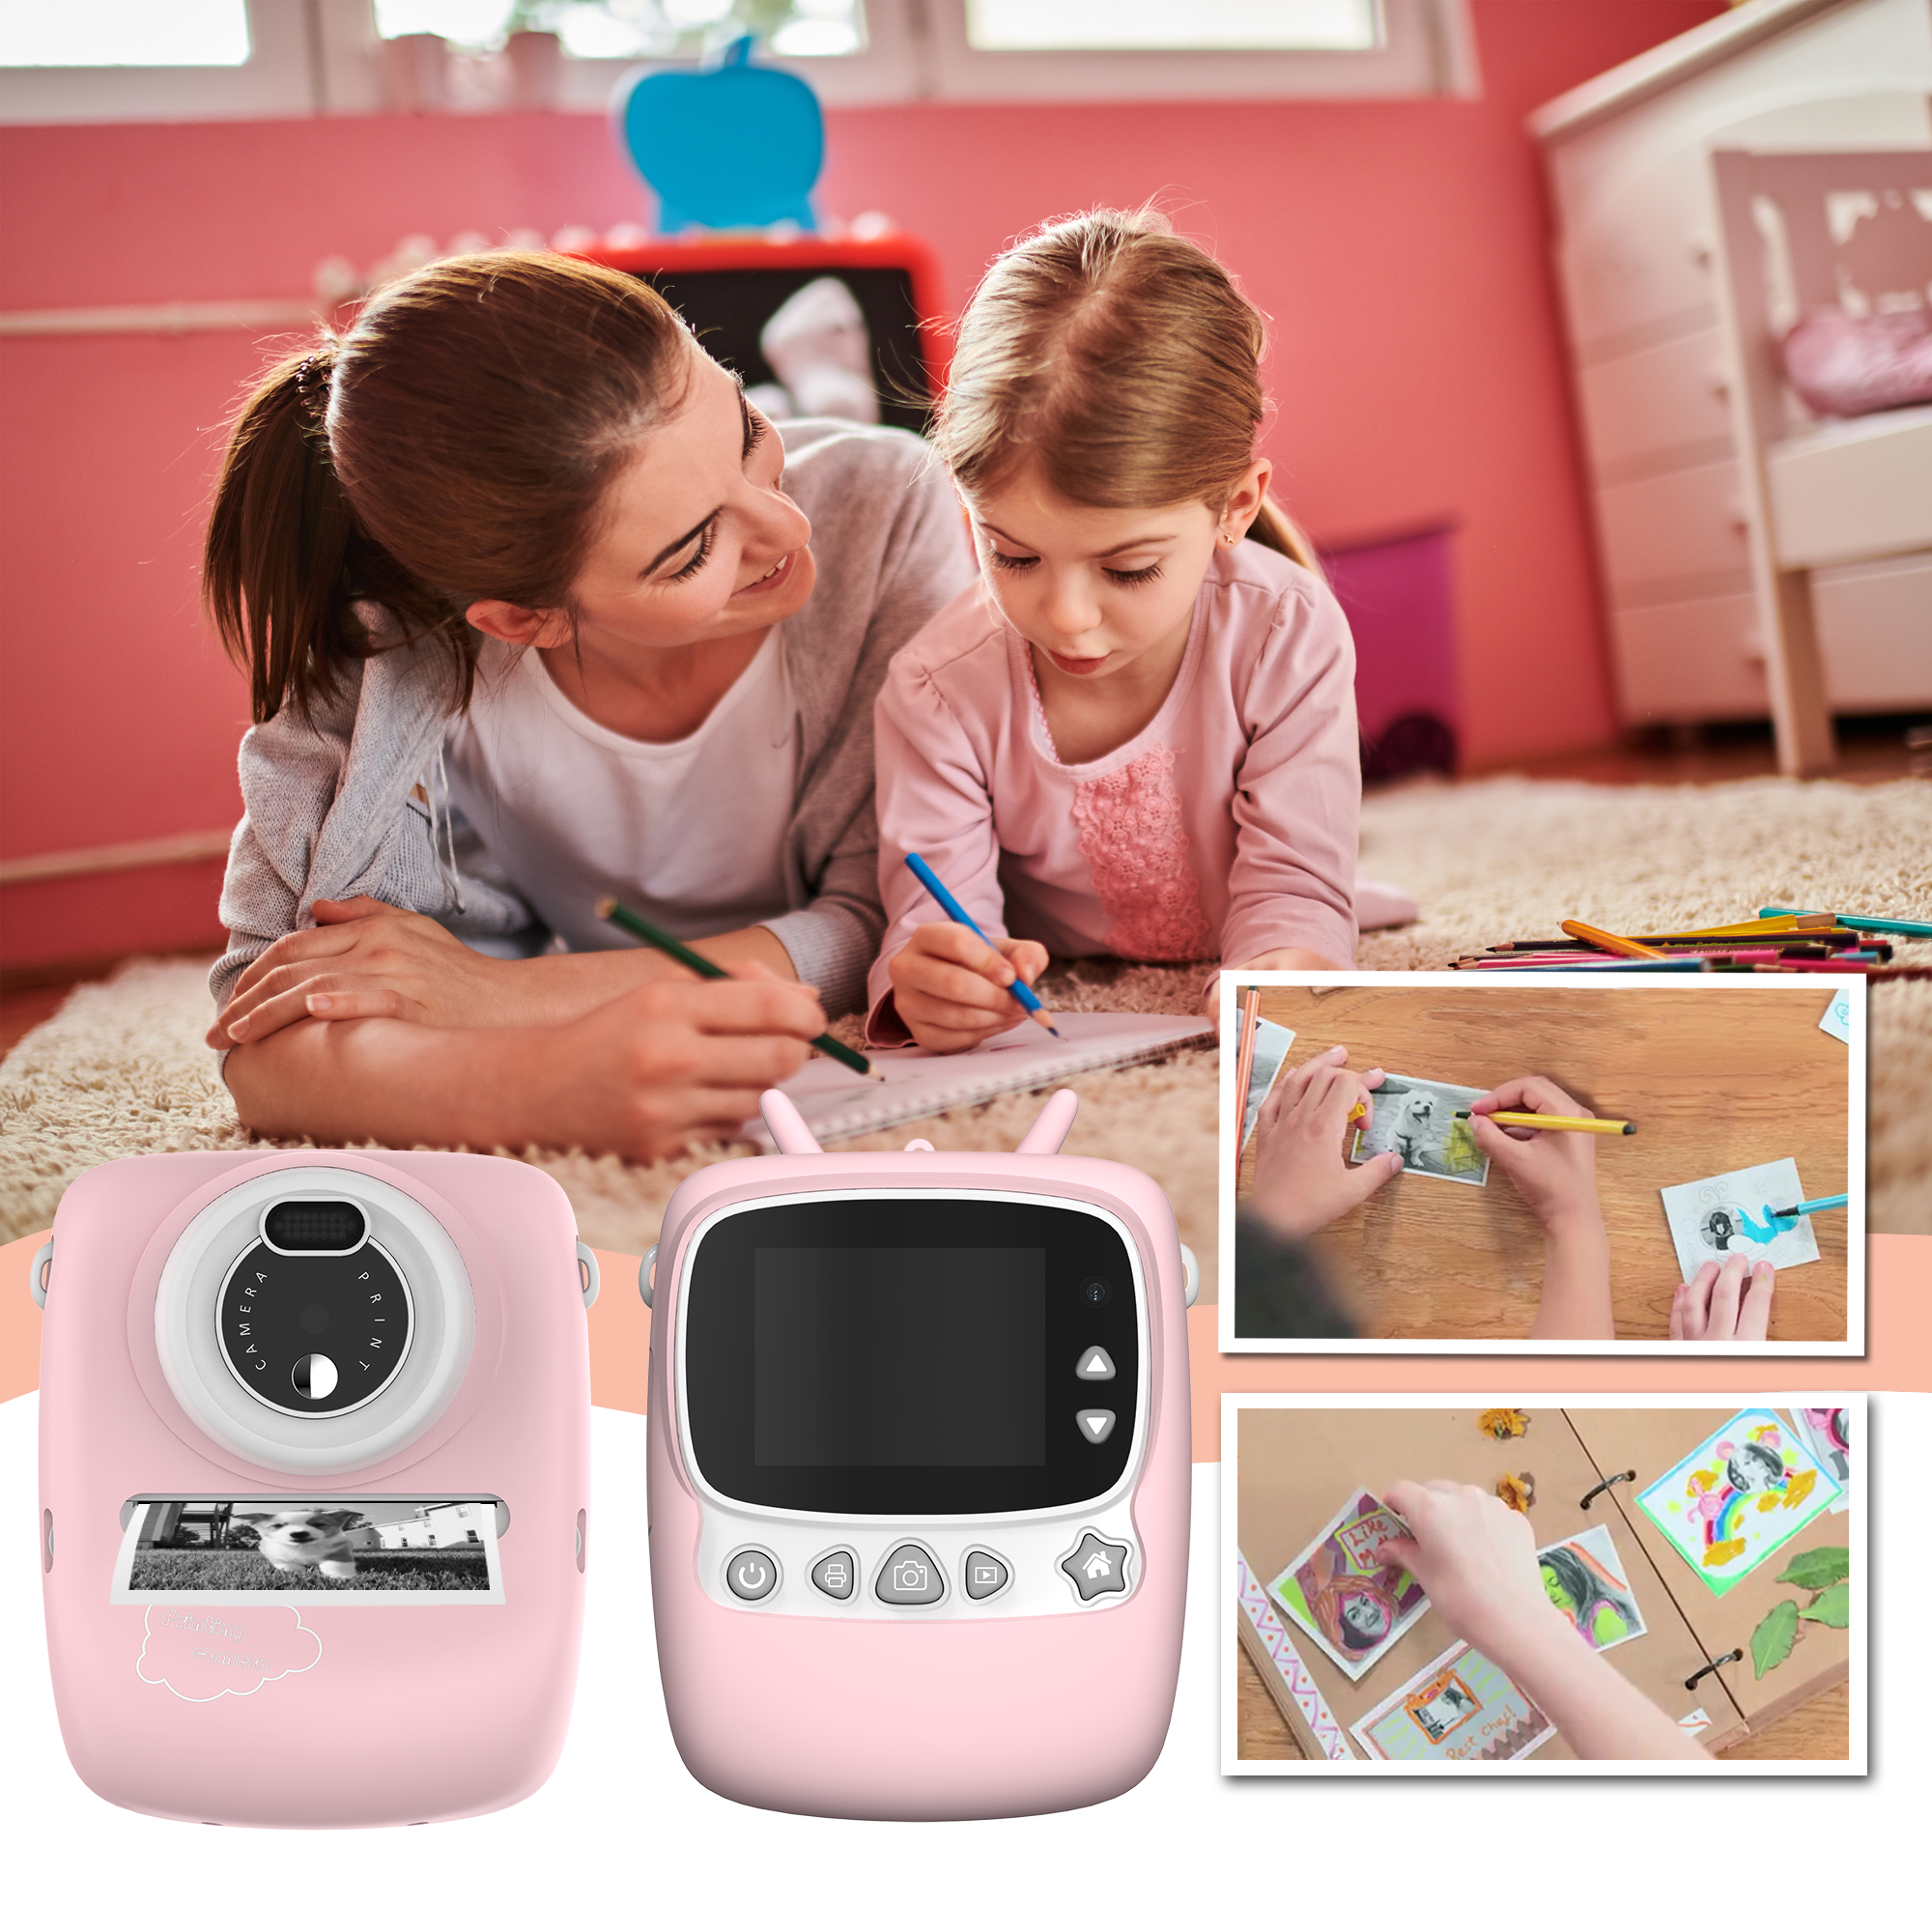 FINE LIFE PRO Cámara juguete infantil Sofortbildkamera, para de niños creativa,Cámara Pink